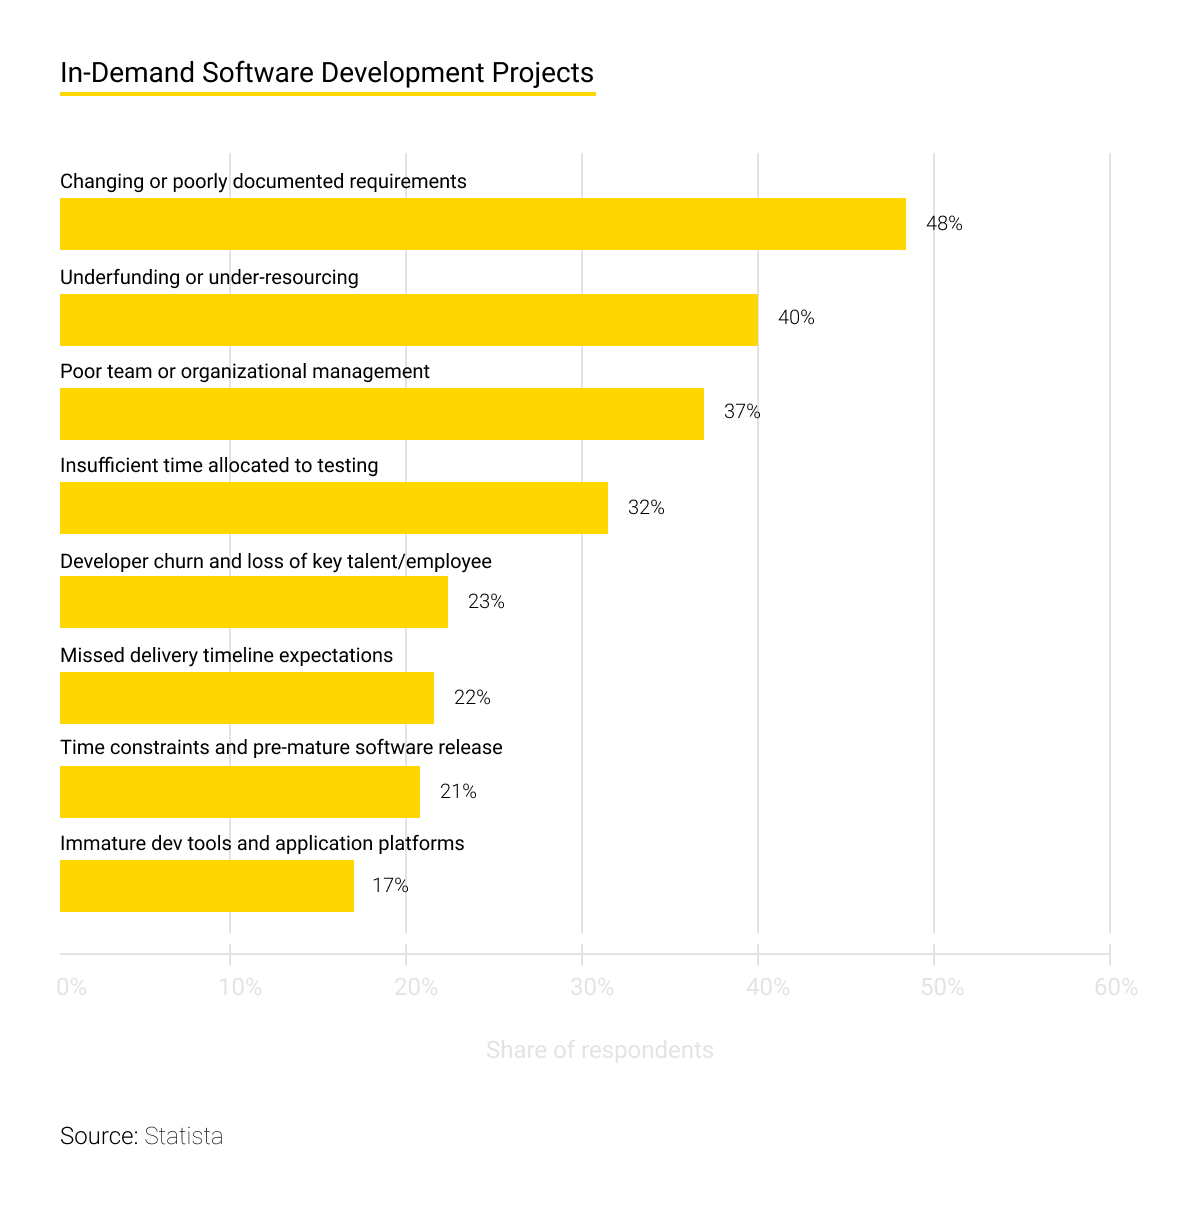 In-Demand Software Development Project 